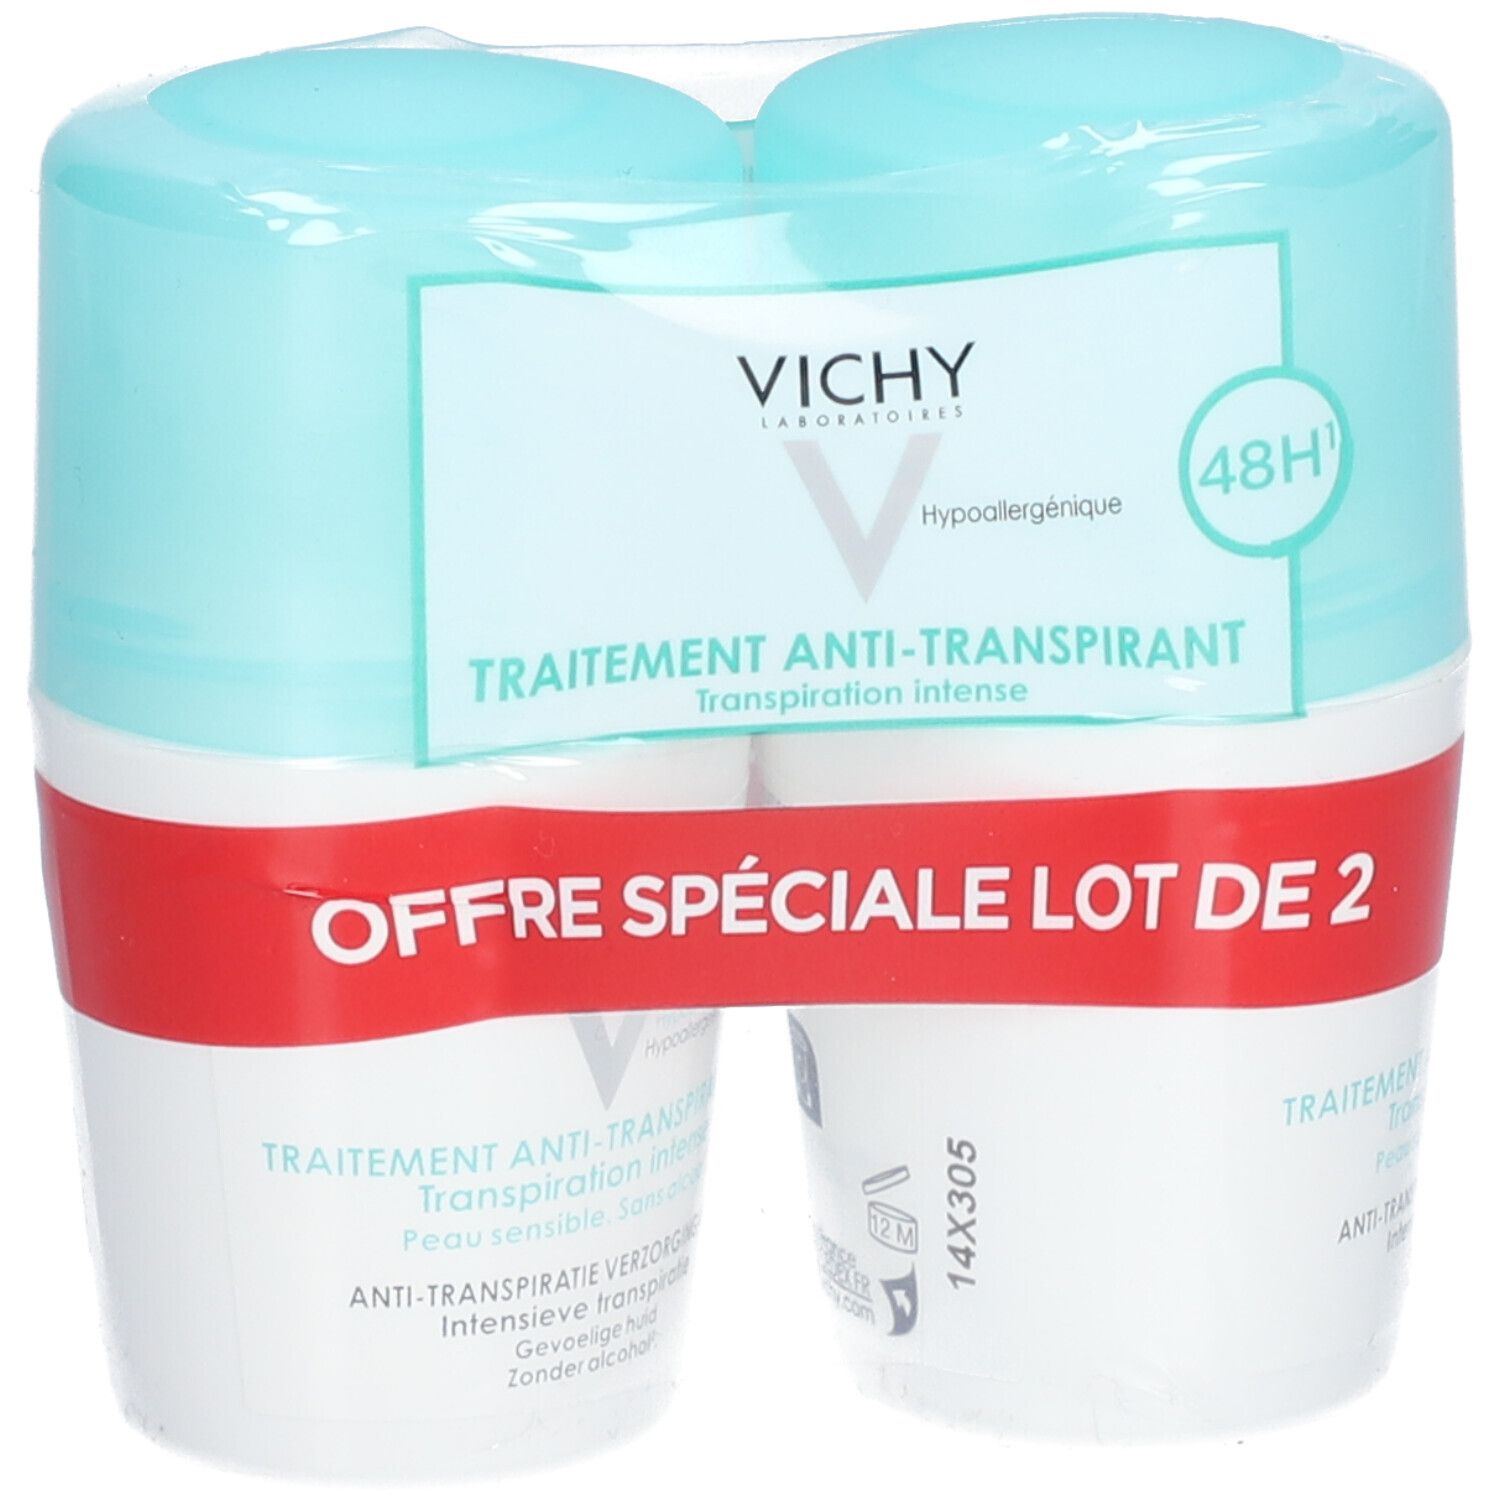 VICHY Déodorant anti-transpirant